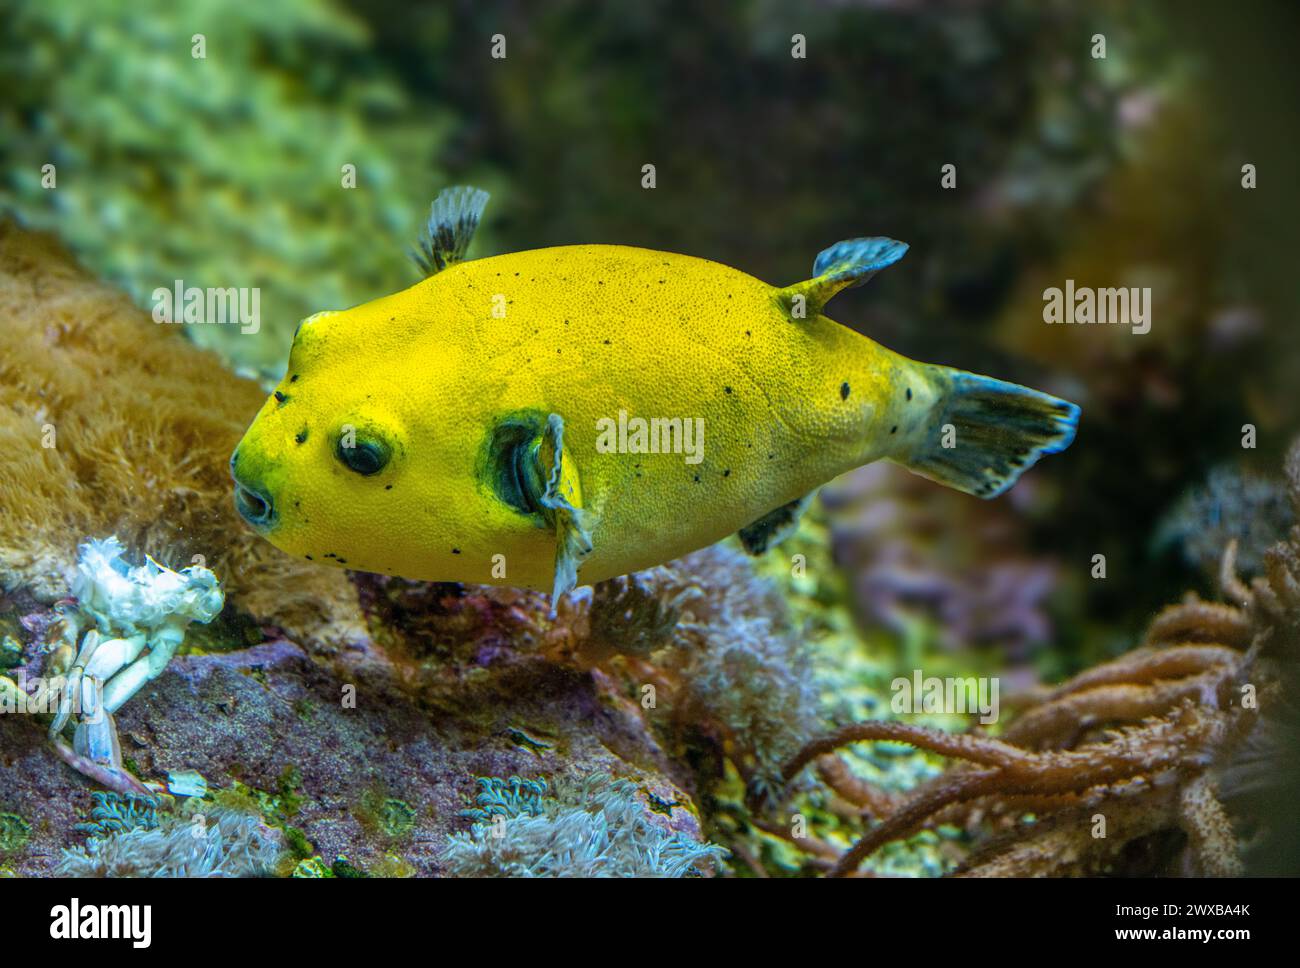 Yellow Blackspotted Puffer Or Dog-faced Puffer Fish Arothron Nigropunctatus Swimming In Water. Stock Photo